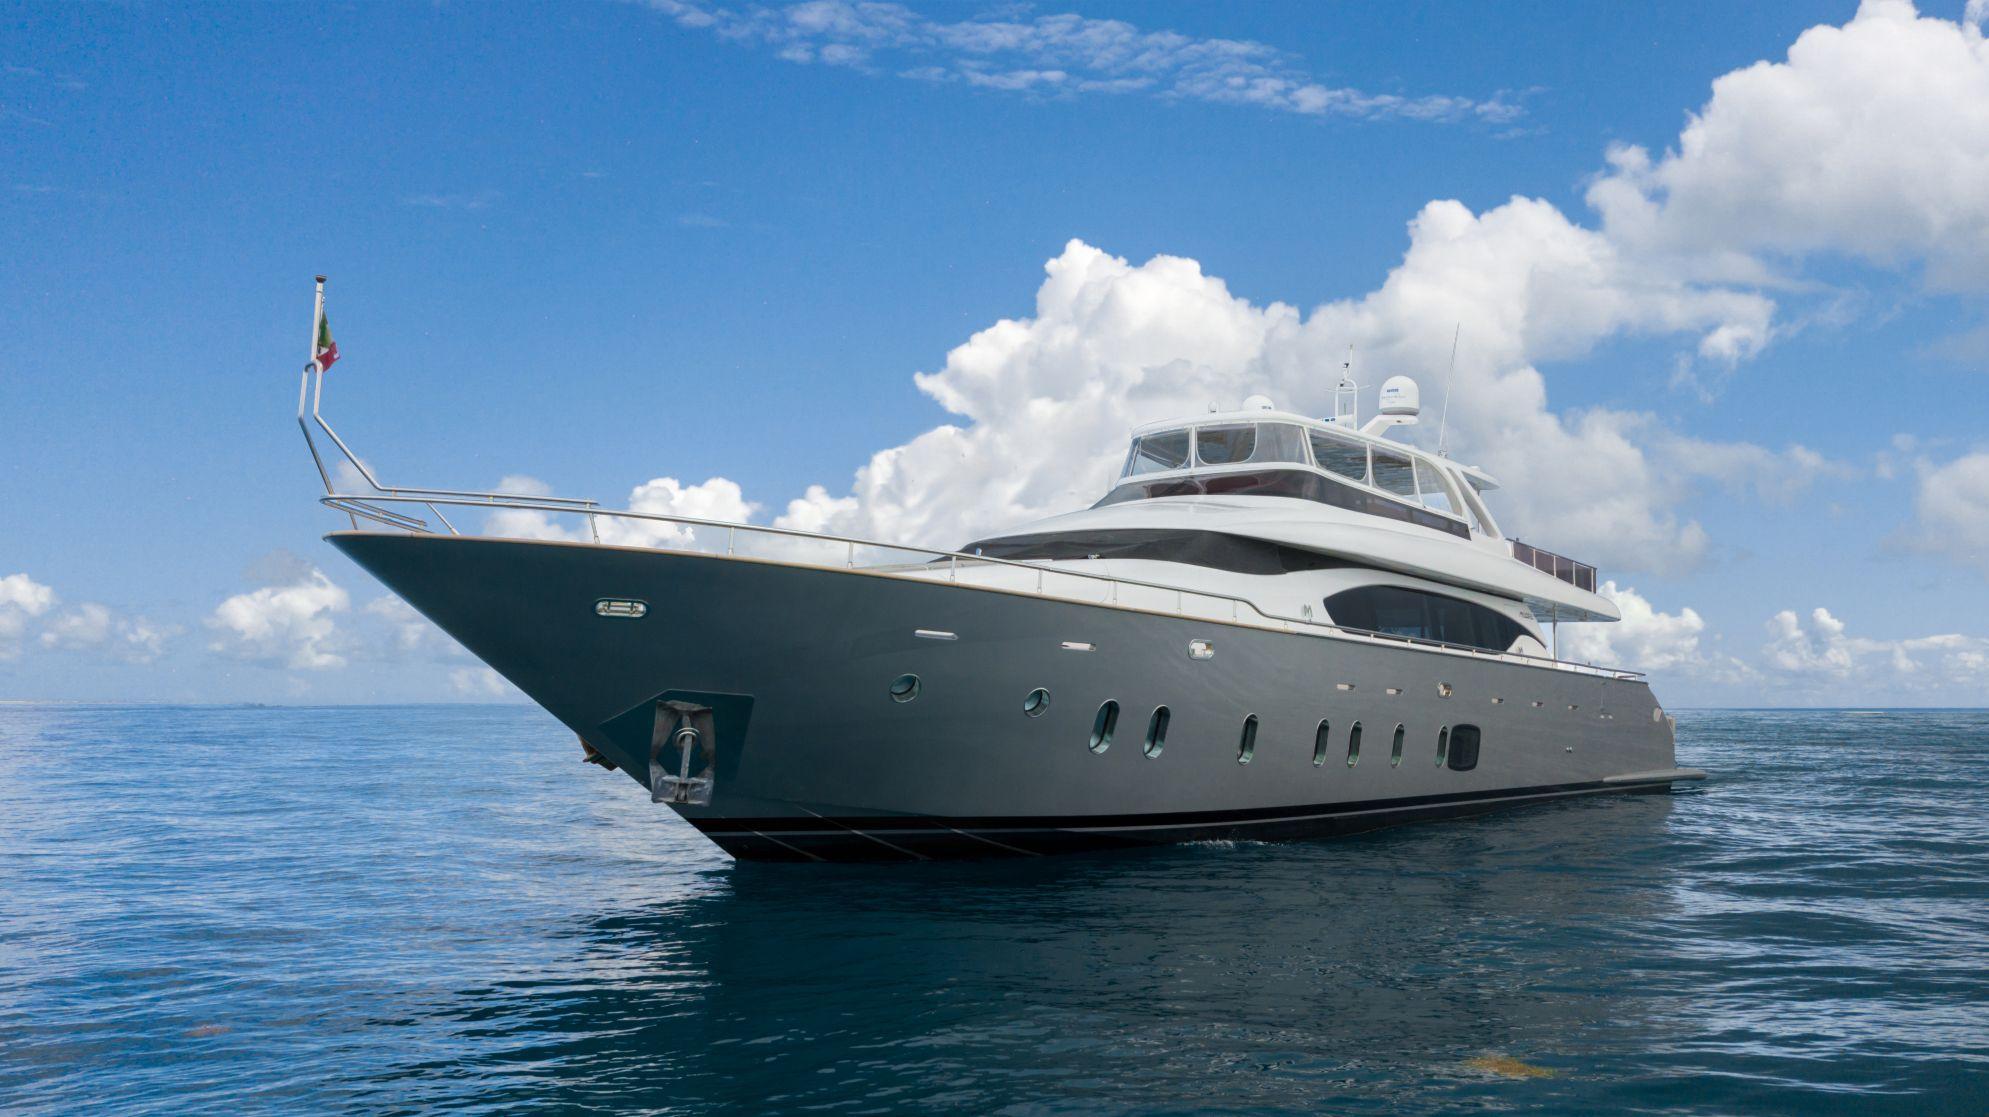 vita xl yacht for sale 95 maiora yachts cancun, mexico denison yacht sales